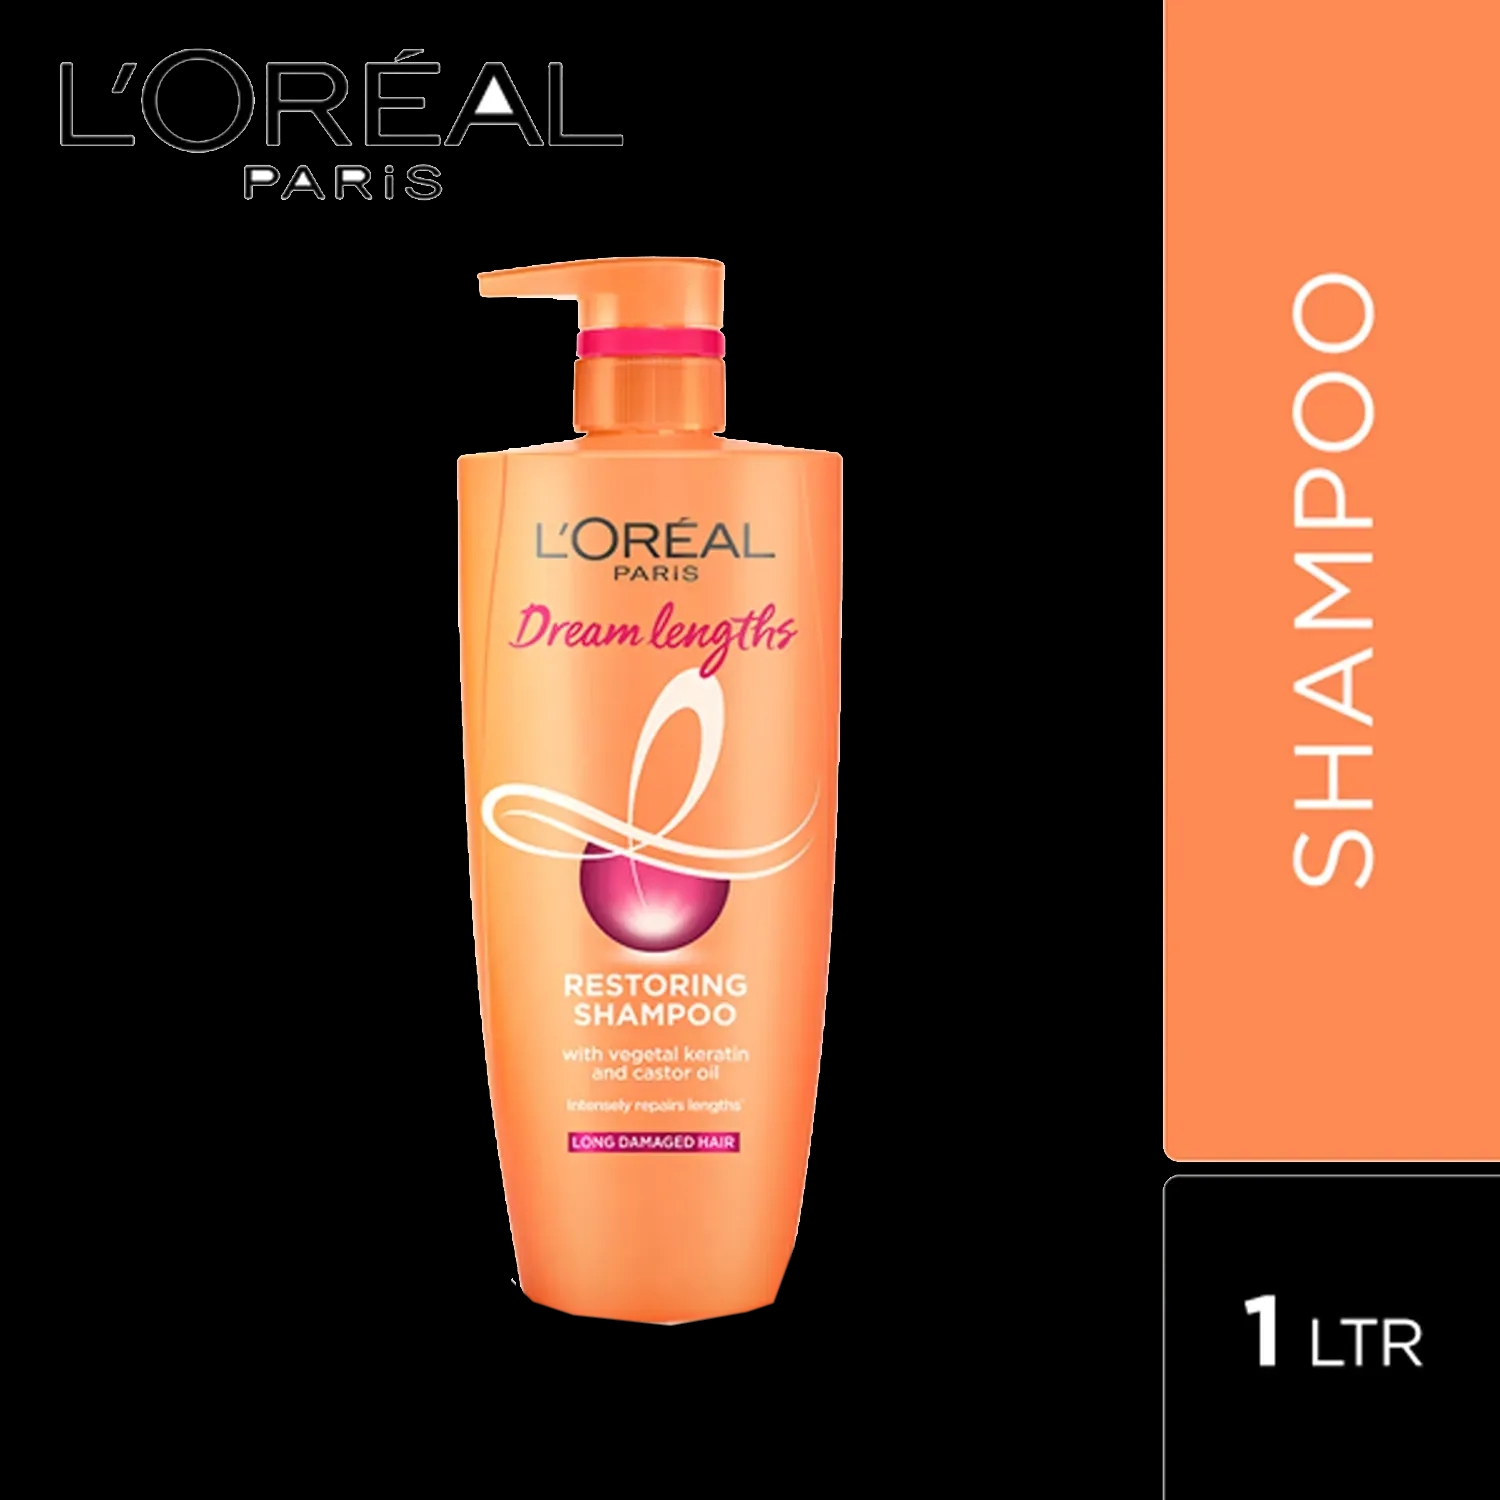 L'Oreal Paris Dream Lengths Shampoo 1 L - L'Oreal Paris